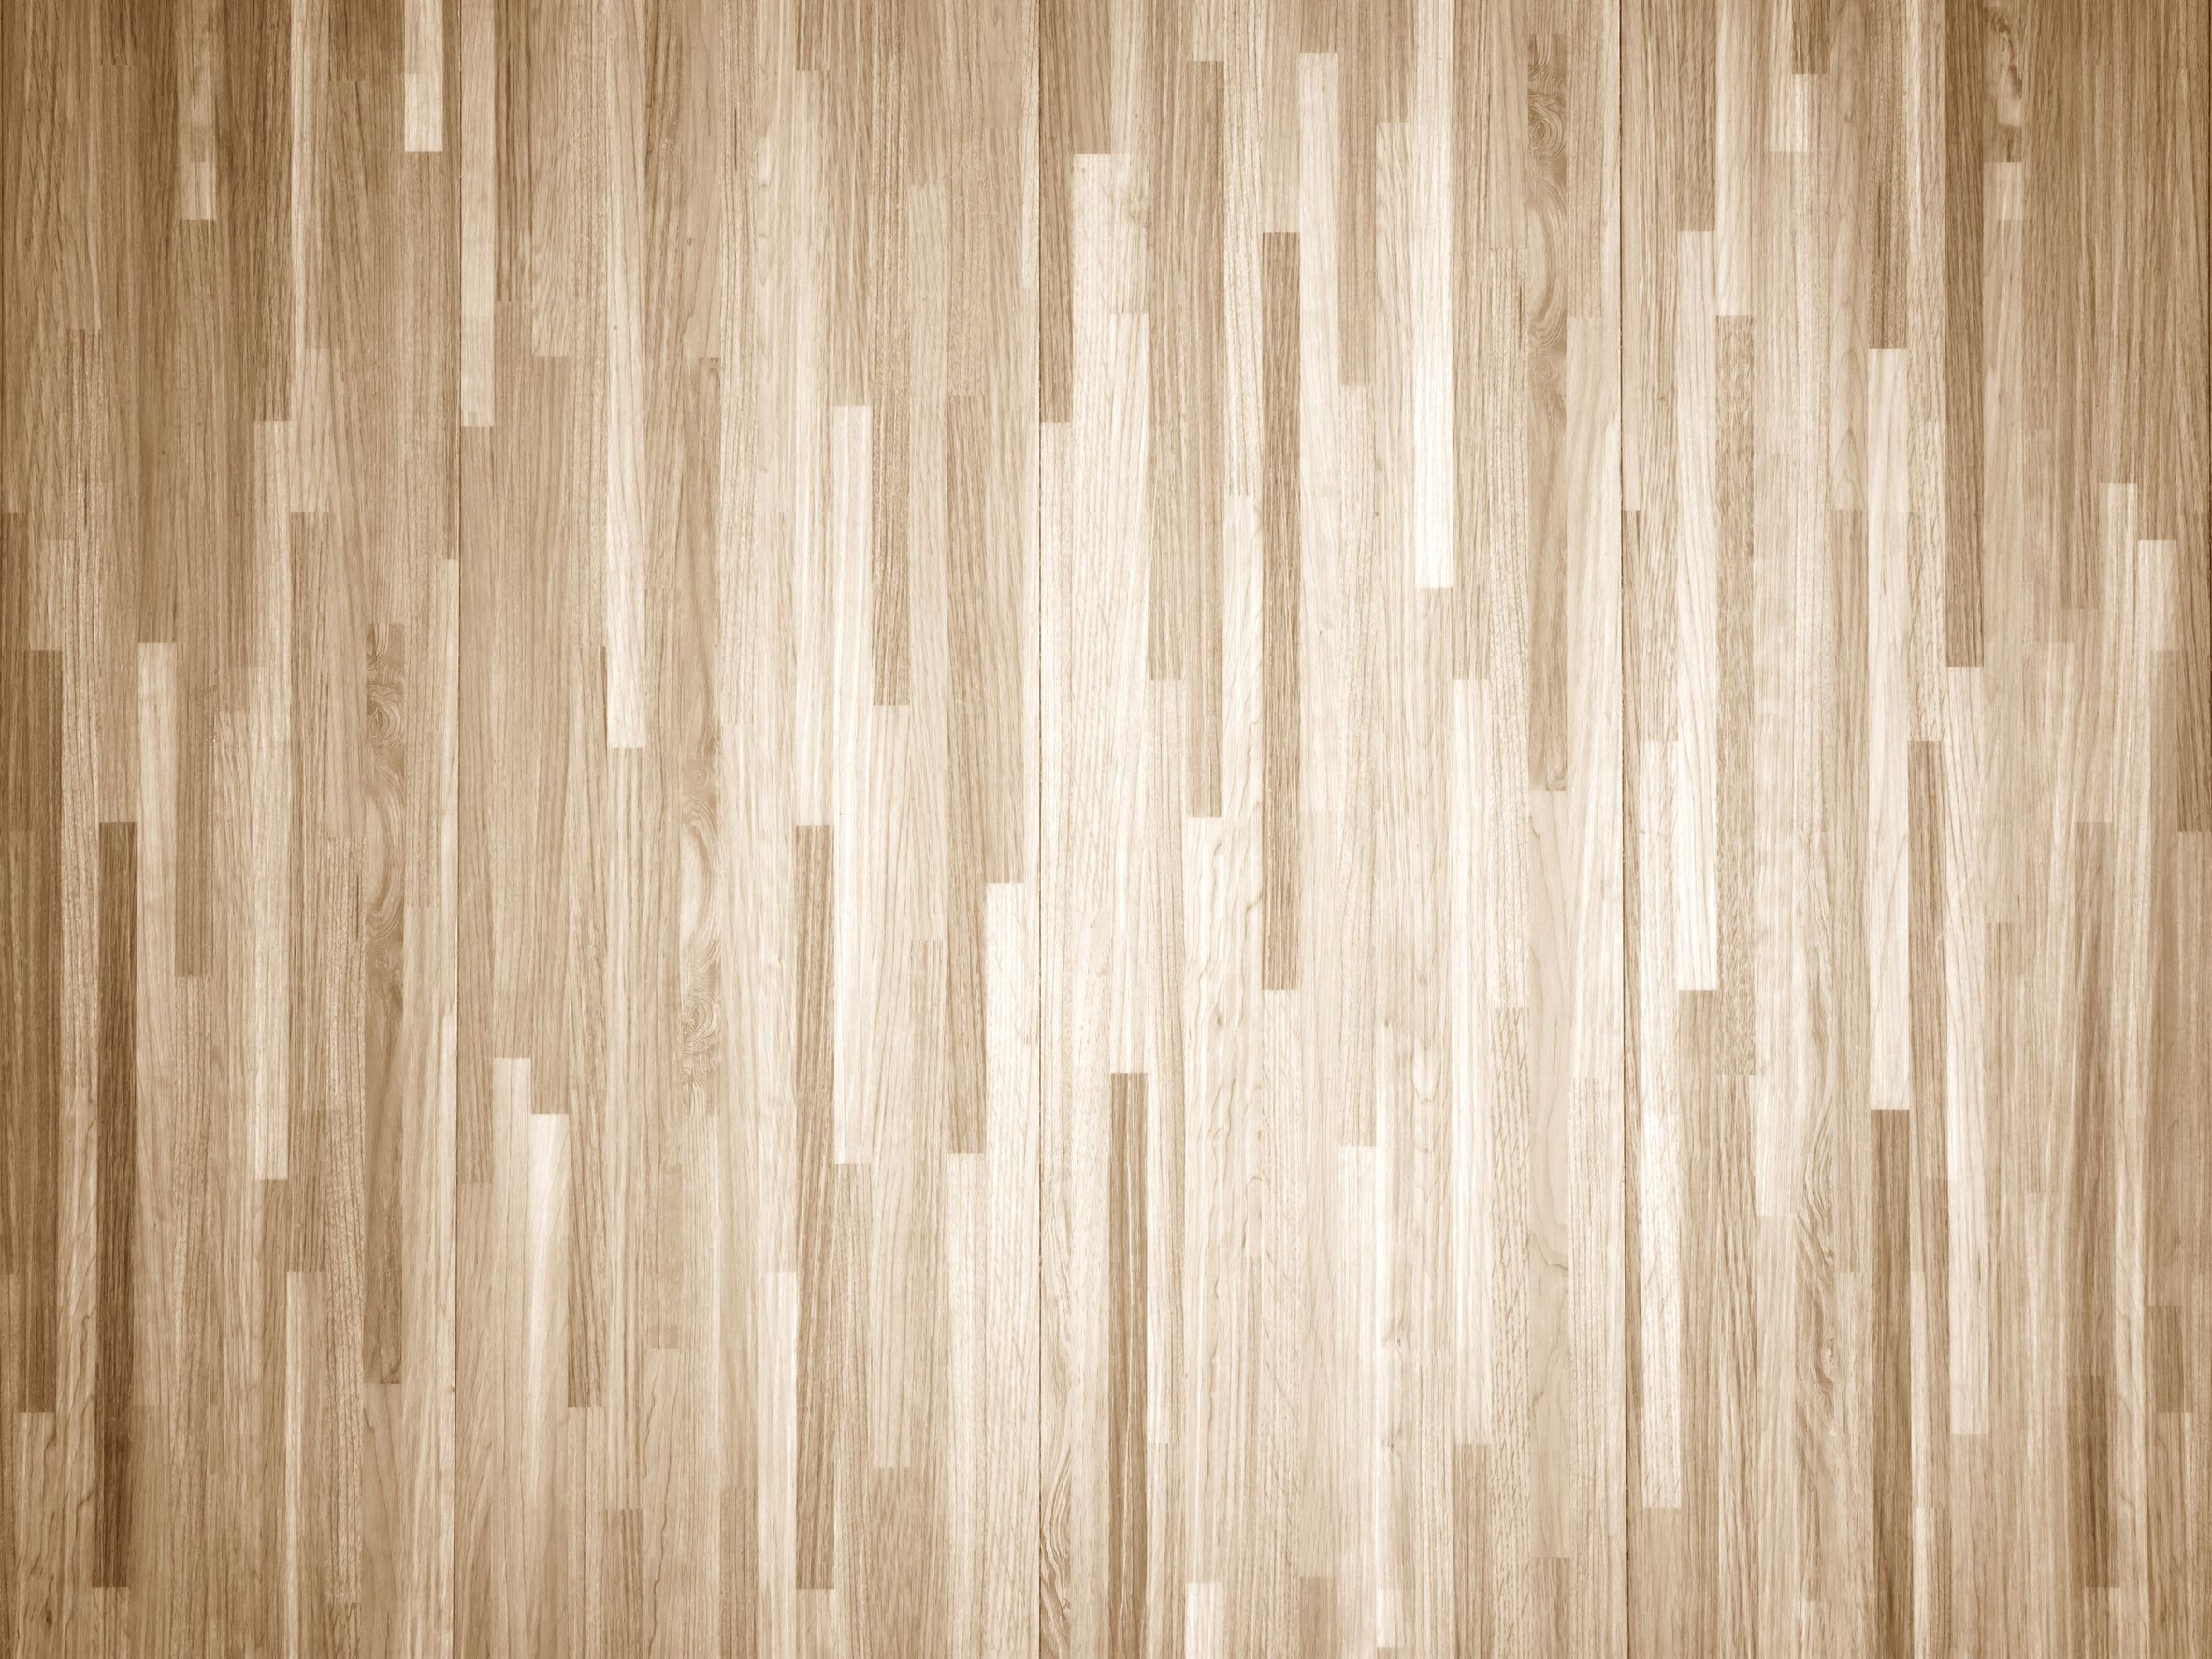 17 Lovable Hardwood Floor Stain Not Drying 2022 free download hardwood floor stain not drying of how to chemically strip wood floors woodfloordoctor com inside you